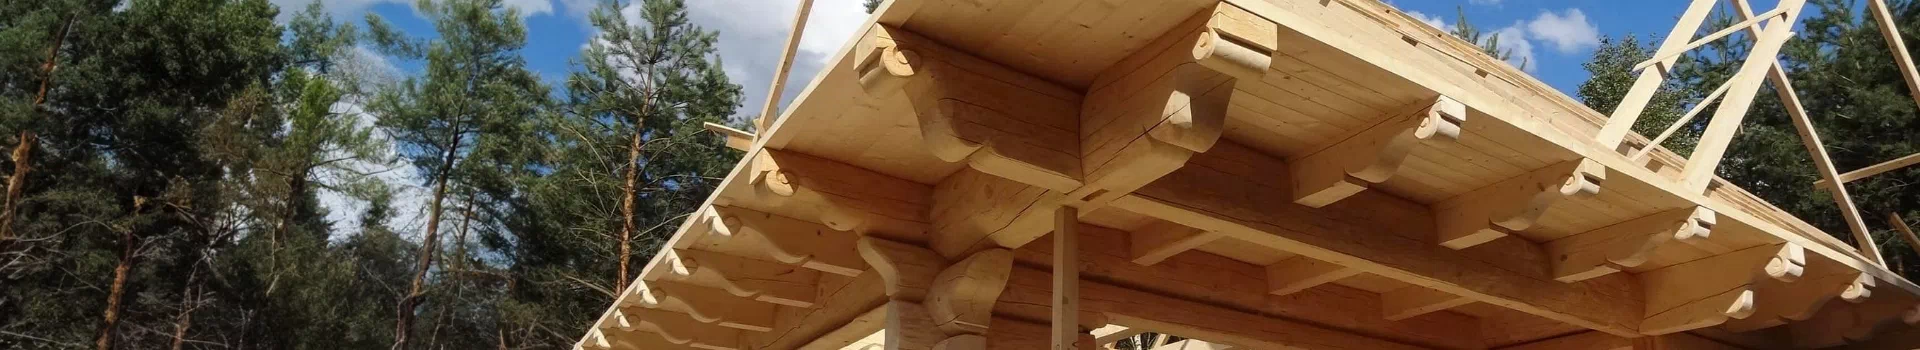 Drewniane elementy domu